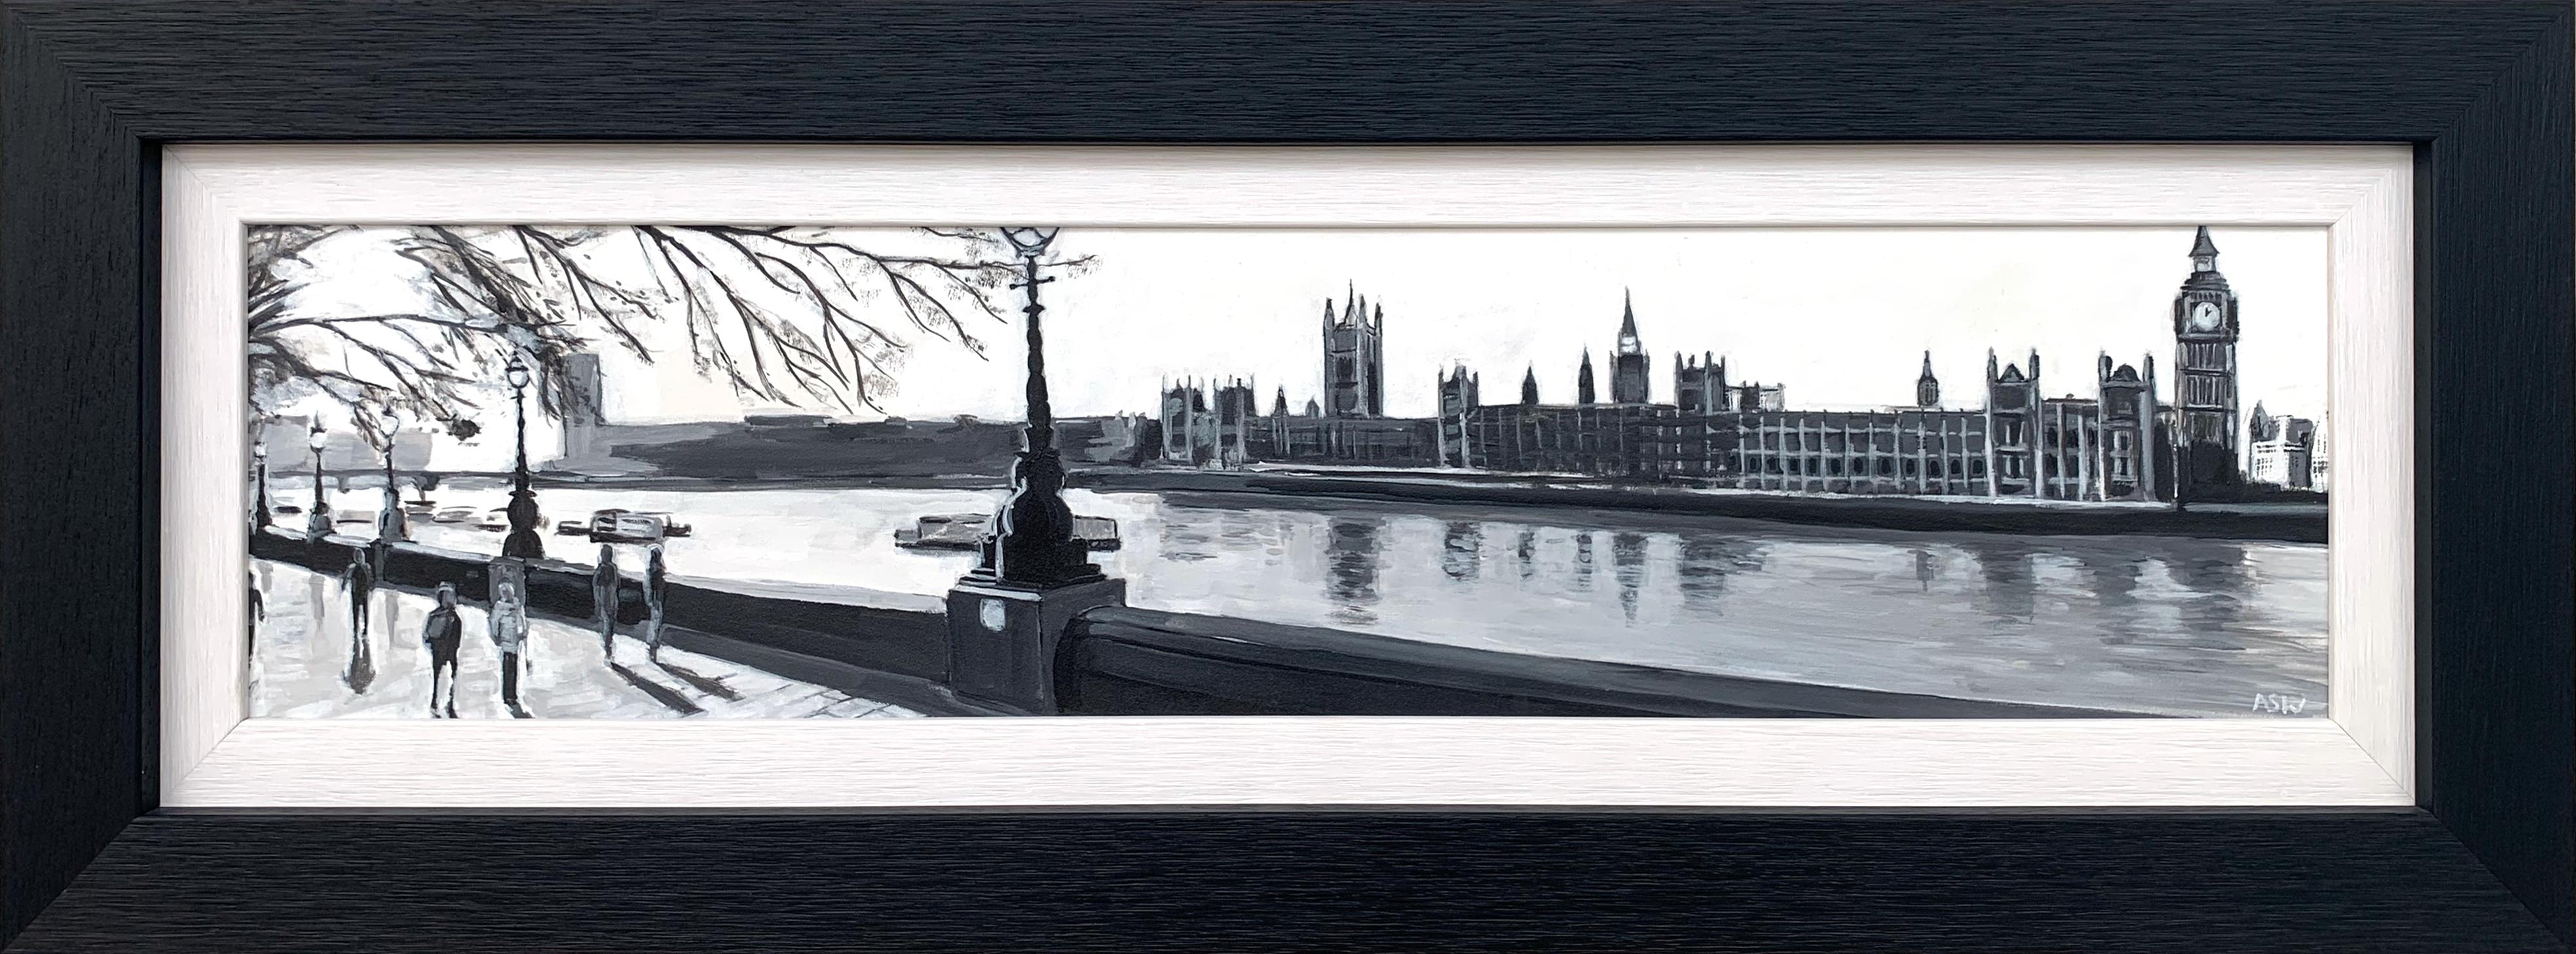 Angela Wakefield Figurative Painting - Panoramic Black & White Painting of Westminster Victoria Embankment London City